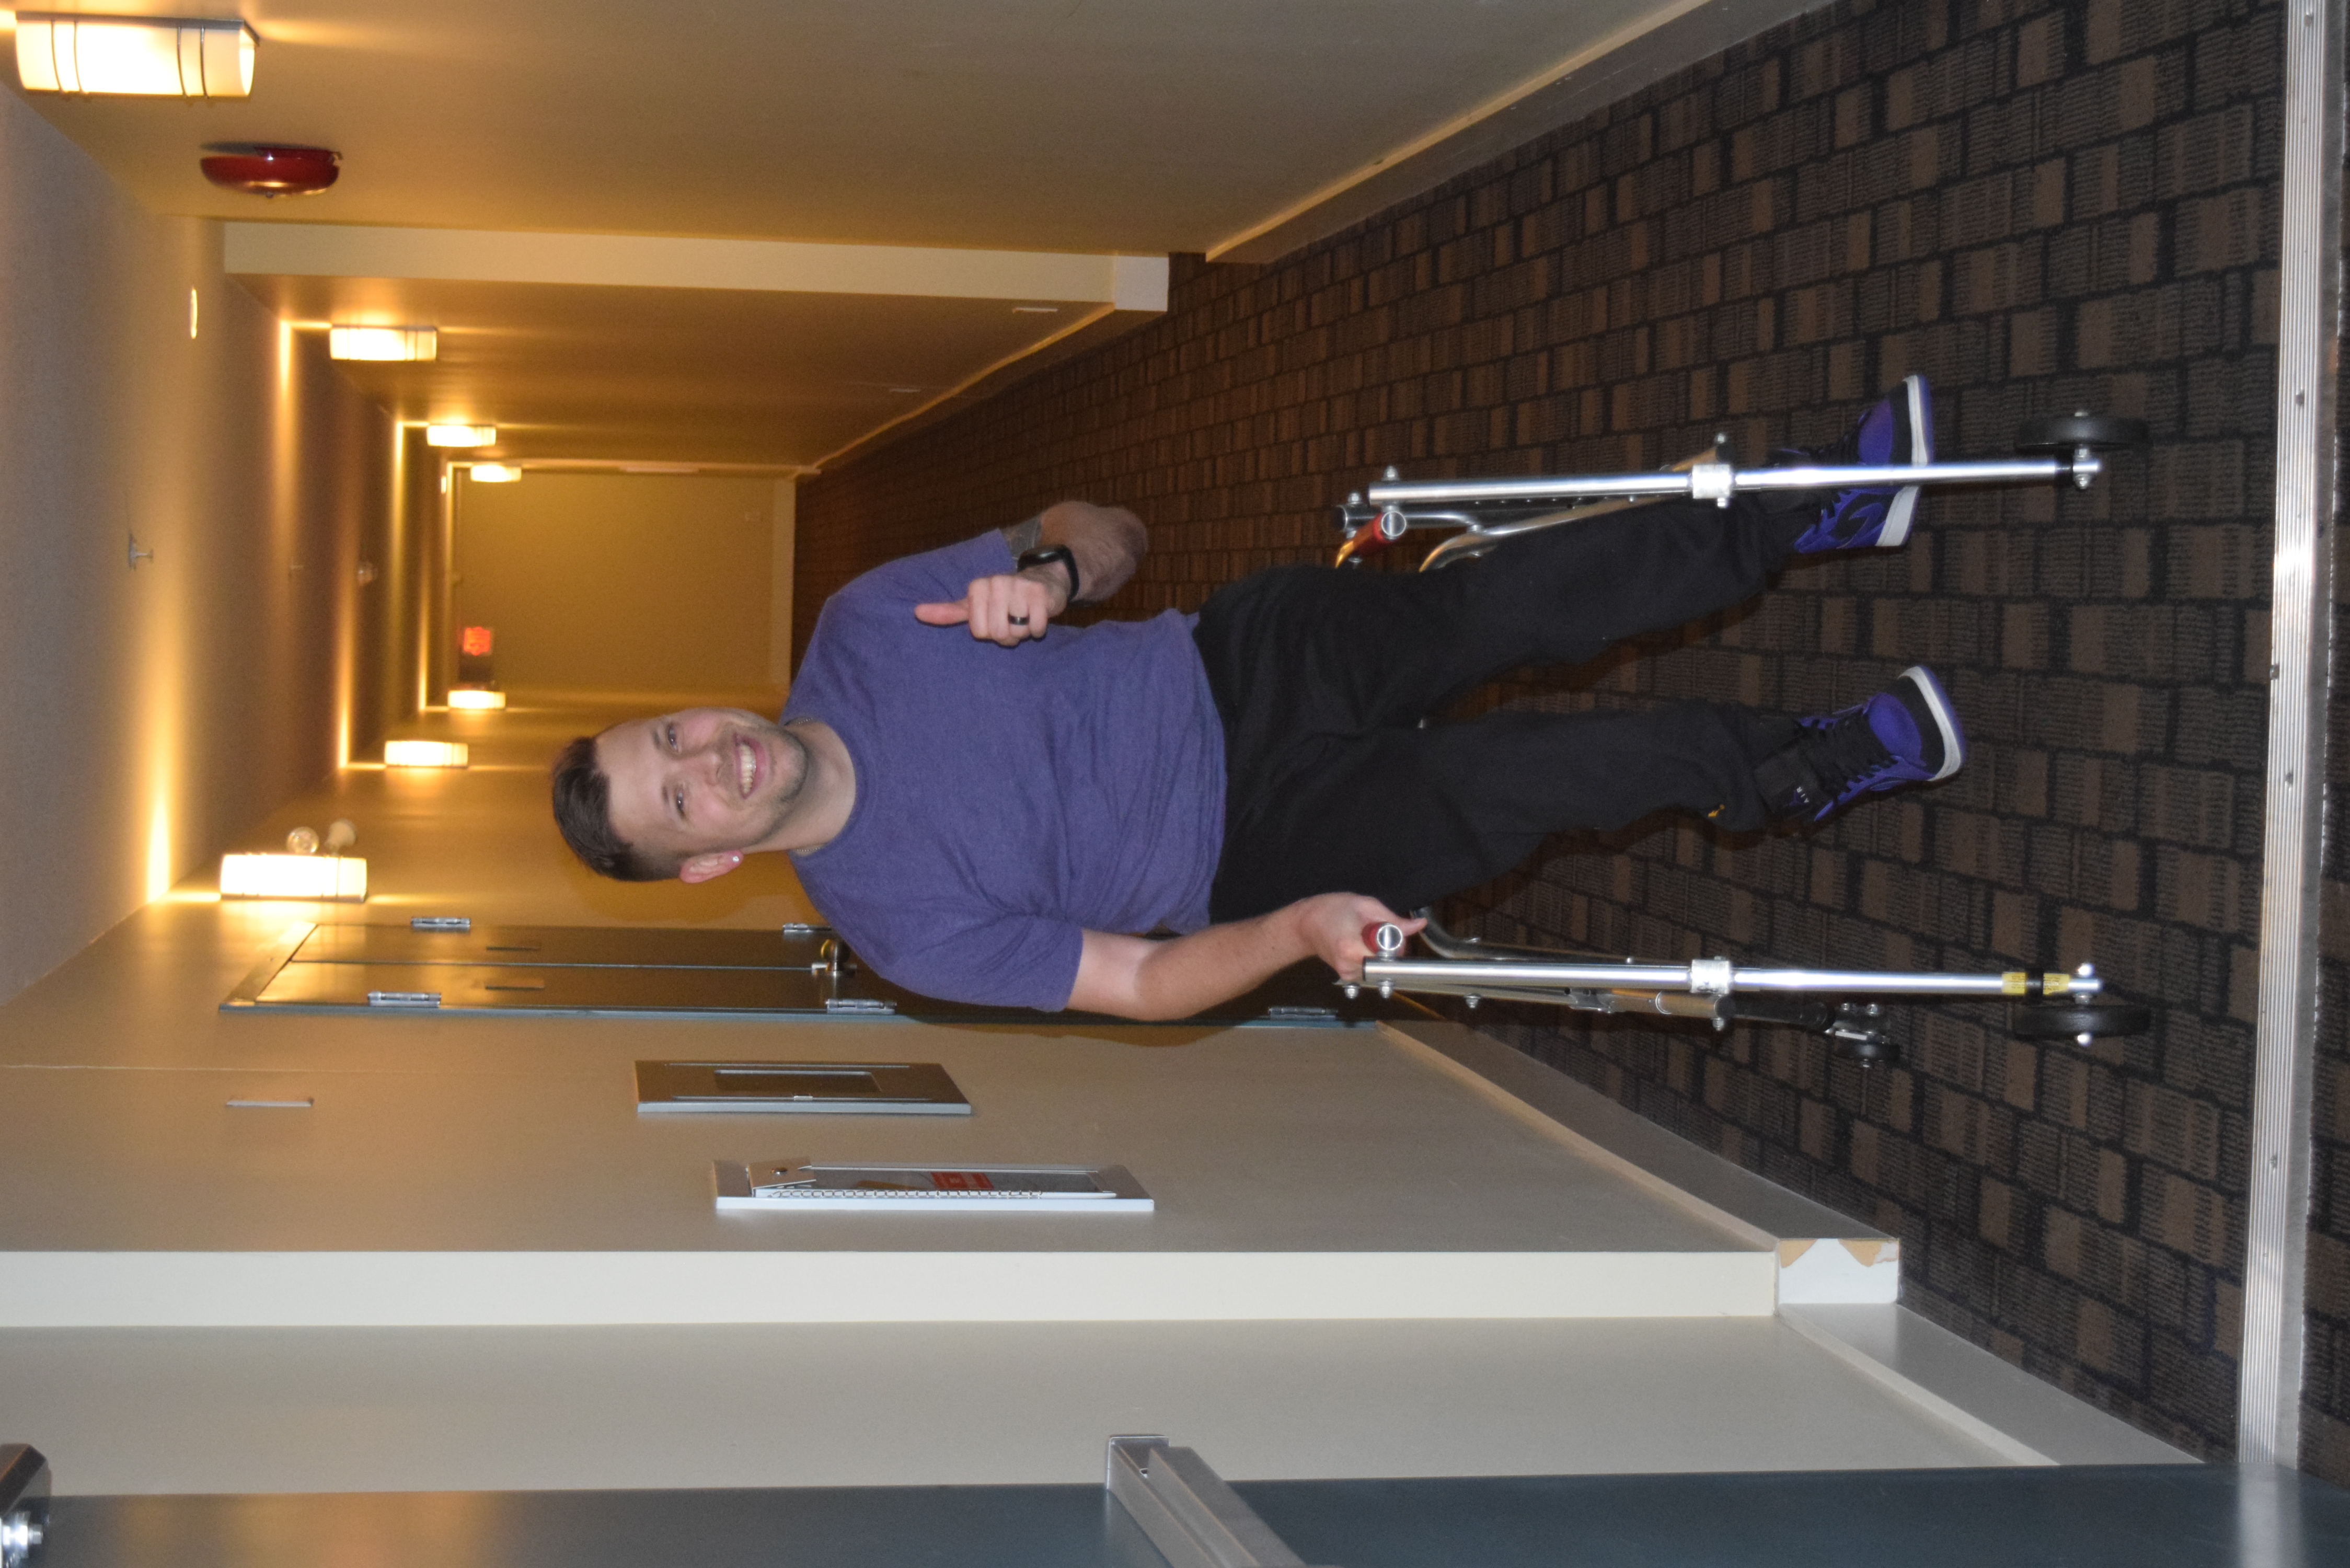 Marco using walker in condo hallway